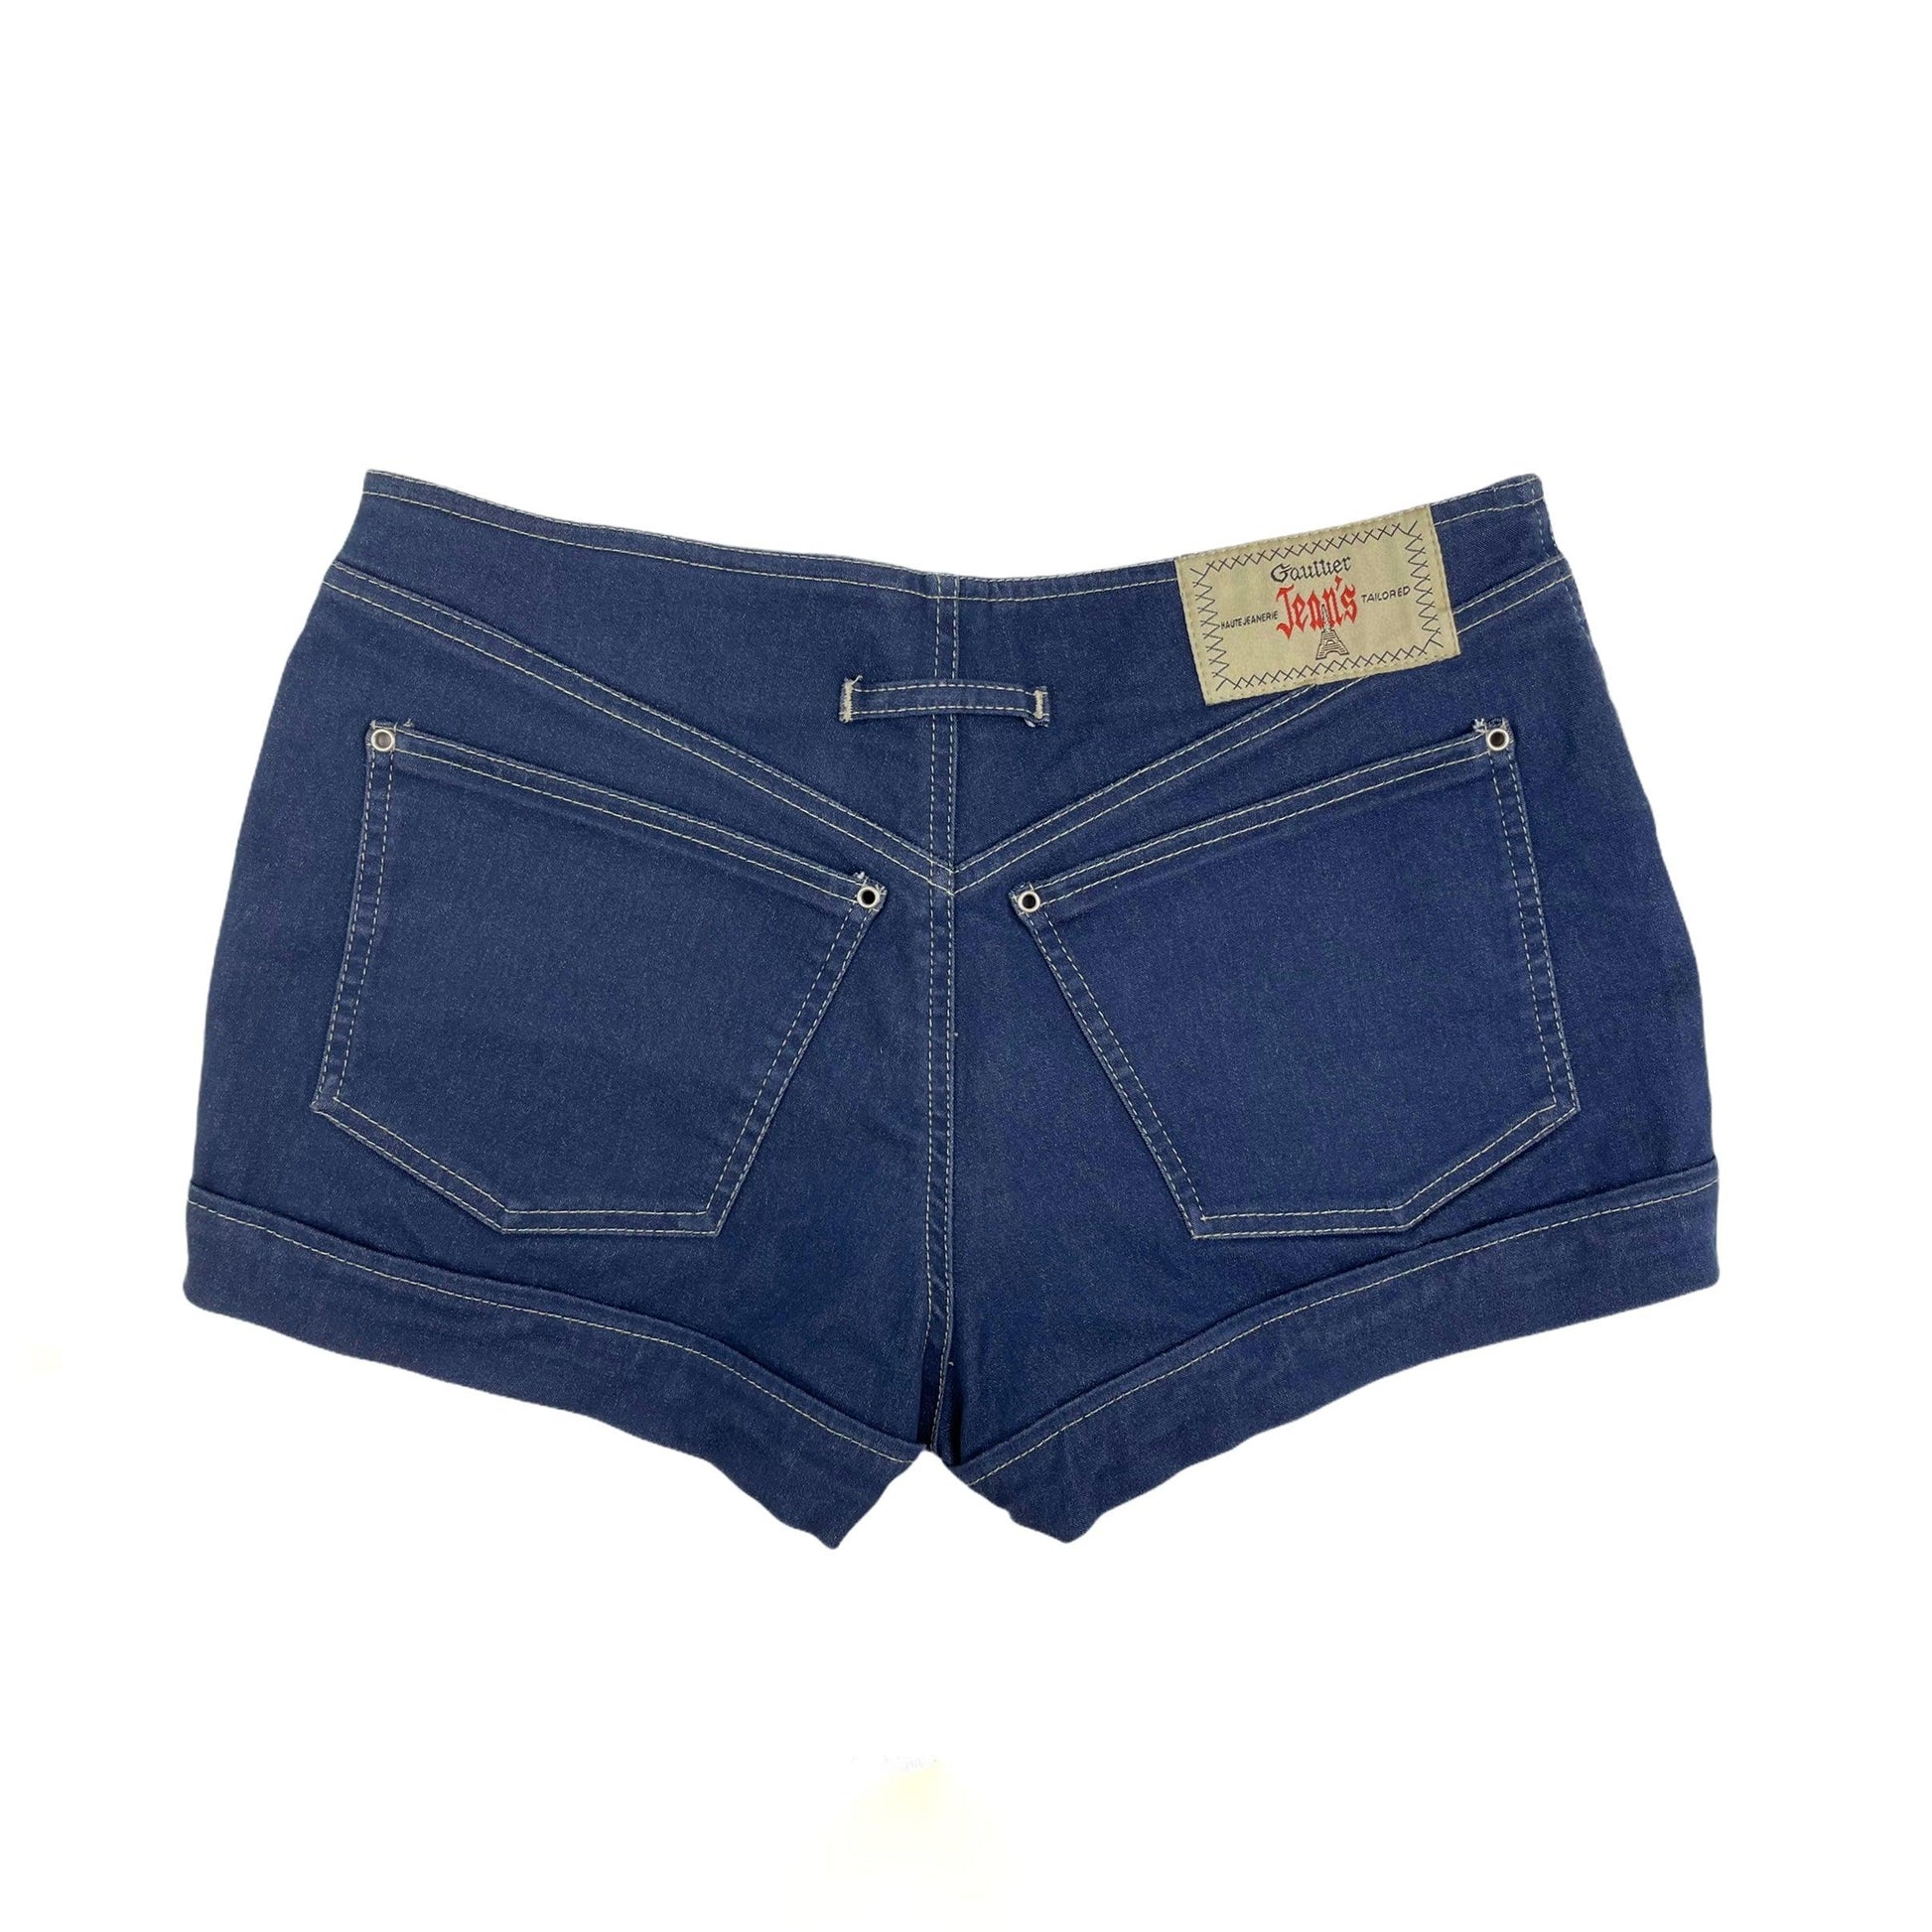 S/S 1998 Jean Paul Gaultier hot pants - Known Source